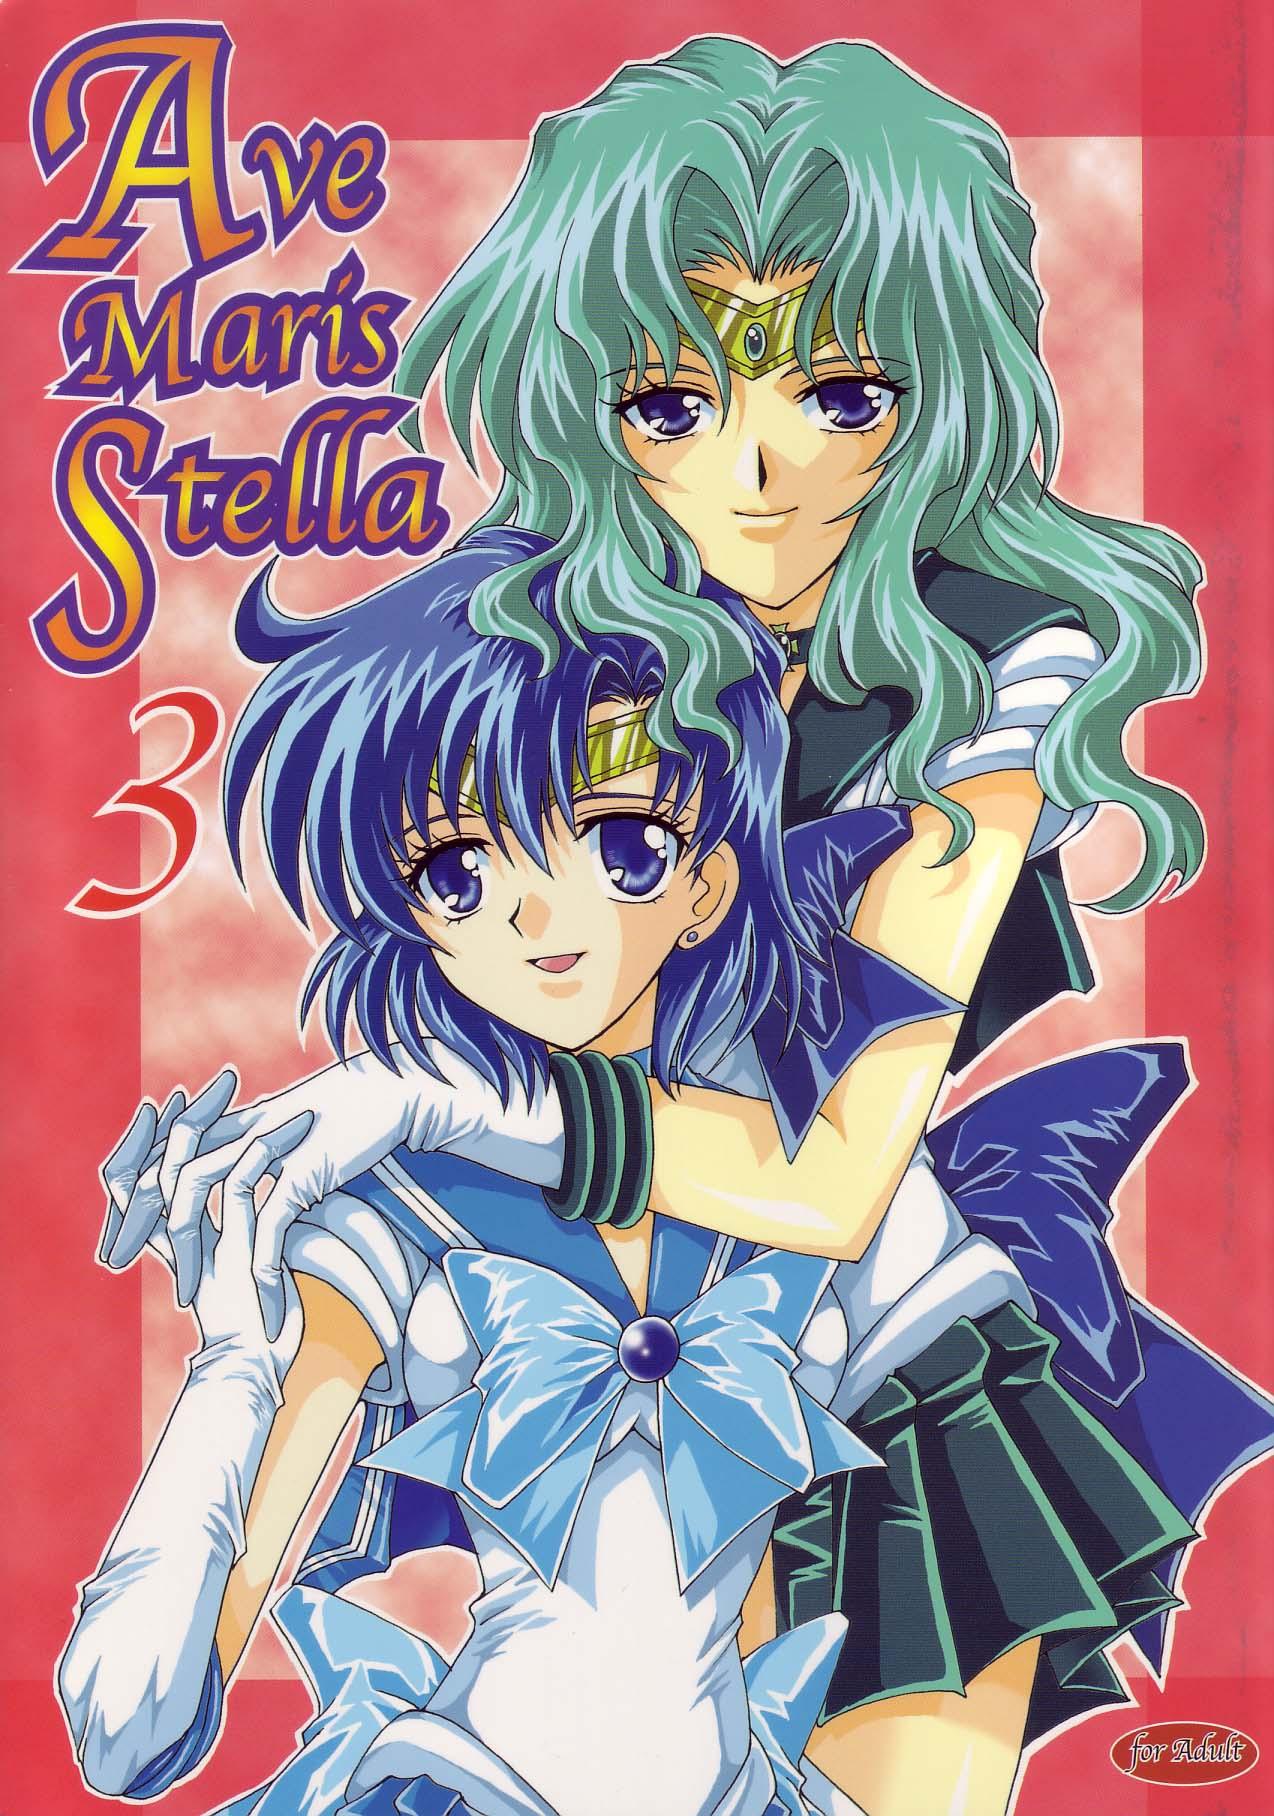 Dancing Ave Maris Stella 3 - Sailor moon Les - Page 1